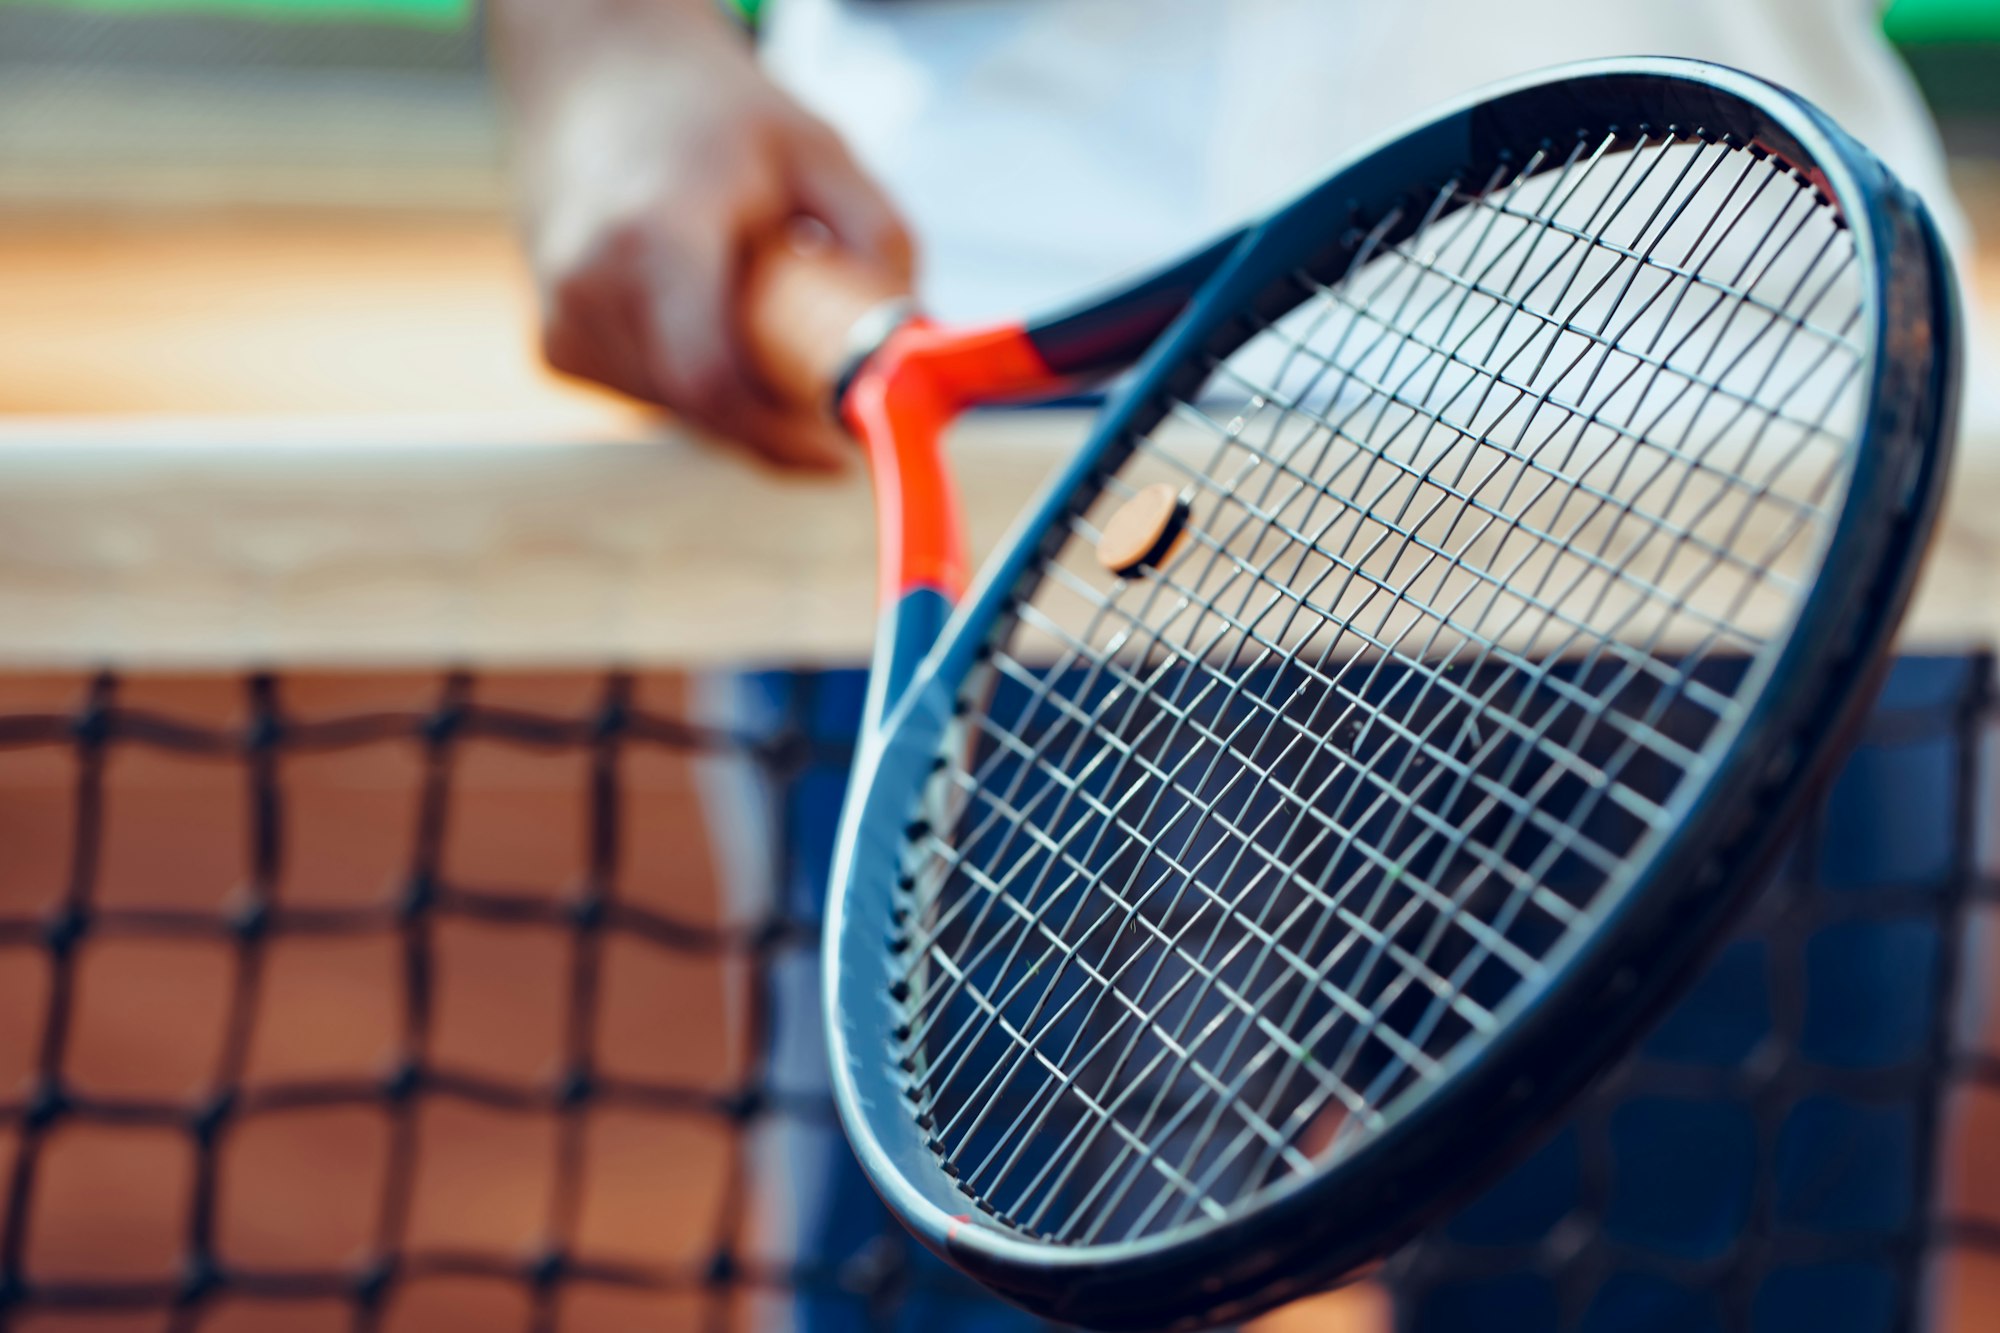 Tennis racket and tennis net on tennis court